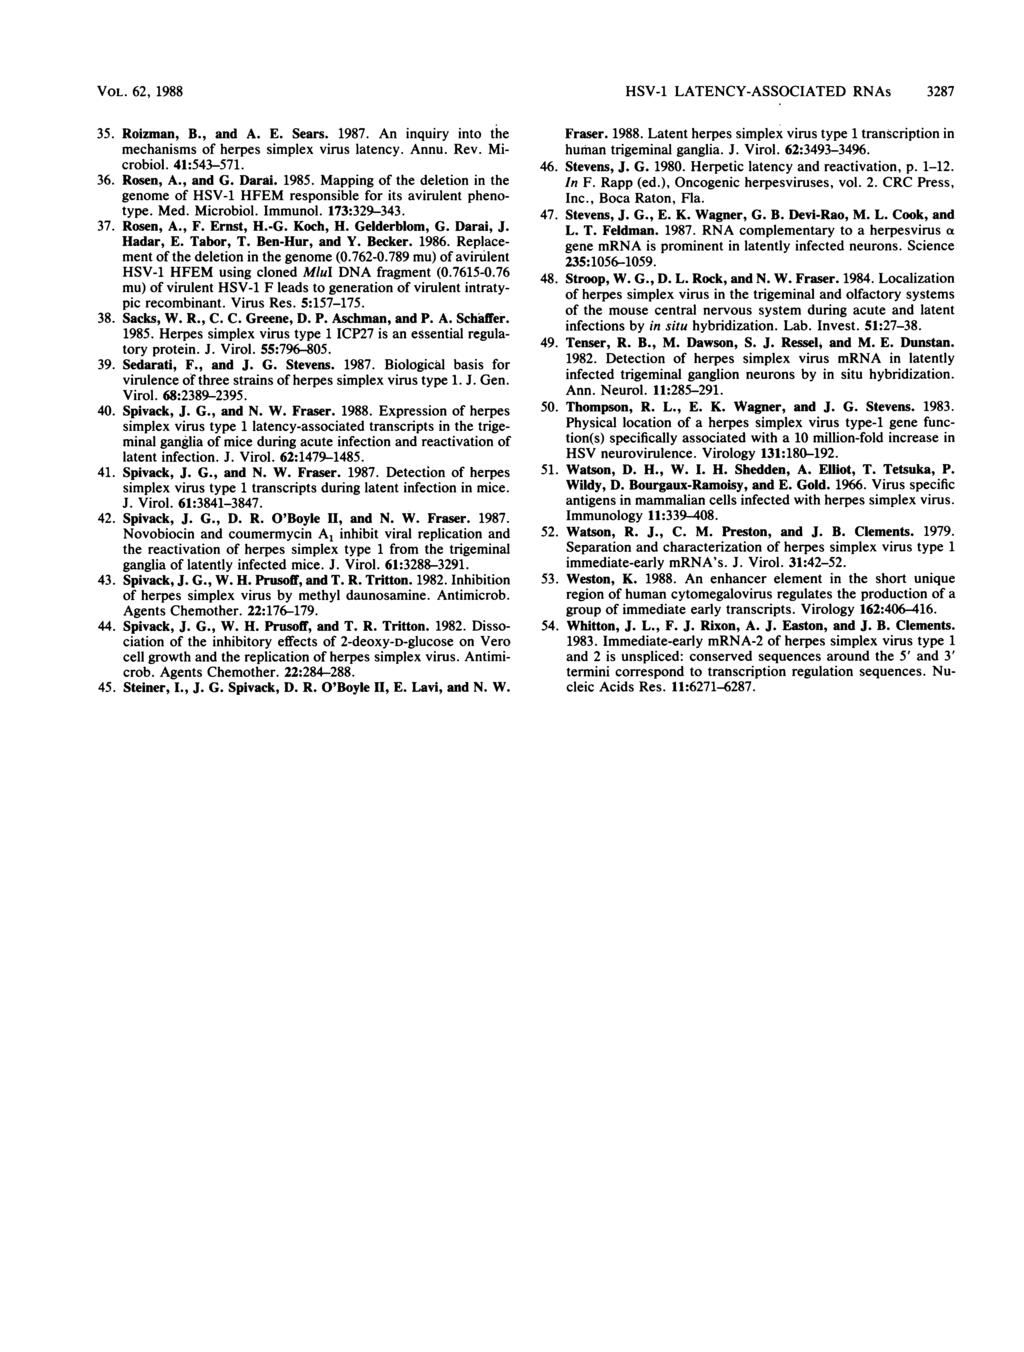 VOL. 62, 1988 35. Roizman, B., and A. E. Sears. 1987. An inquiry into the mechanisms of herpes simplex virus latency. Annu. Rev. Microbiol. 41:543-571. 36. Rosen, A., and G. Darai. 1985.